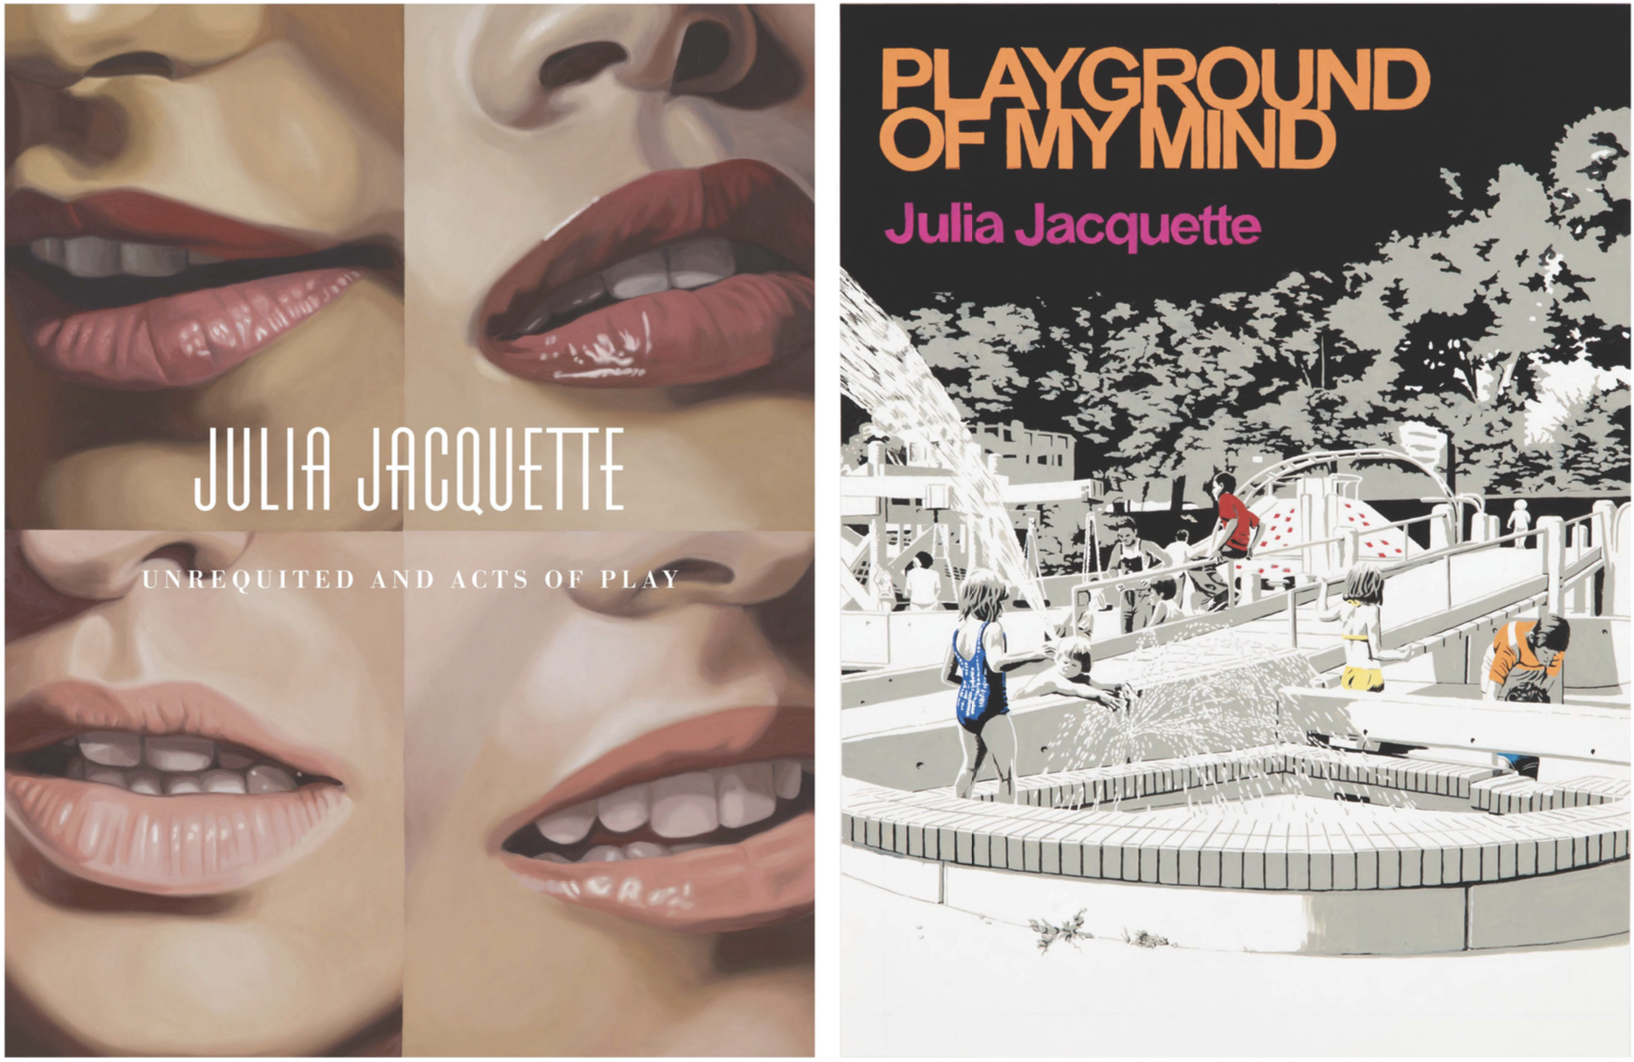 Julia Jacquette Event Image